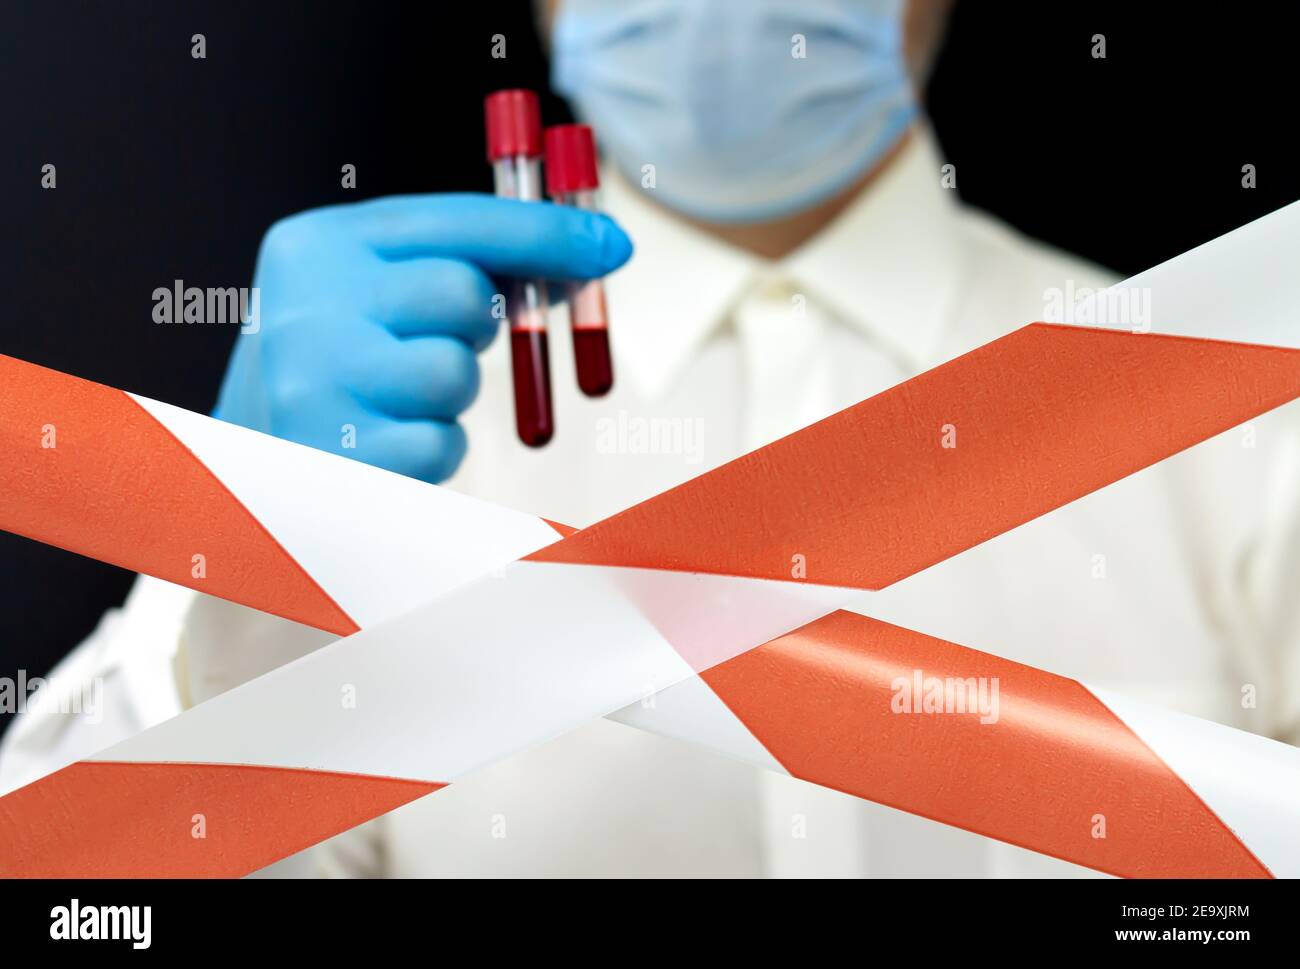 Secret biological weapons against humans, epidemic of virus concept. Medicine worker holdinf blood flasks behind warning tapes Stock Photo